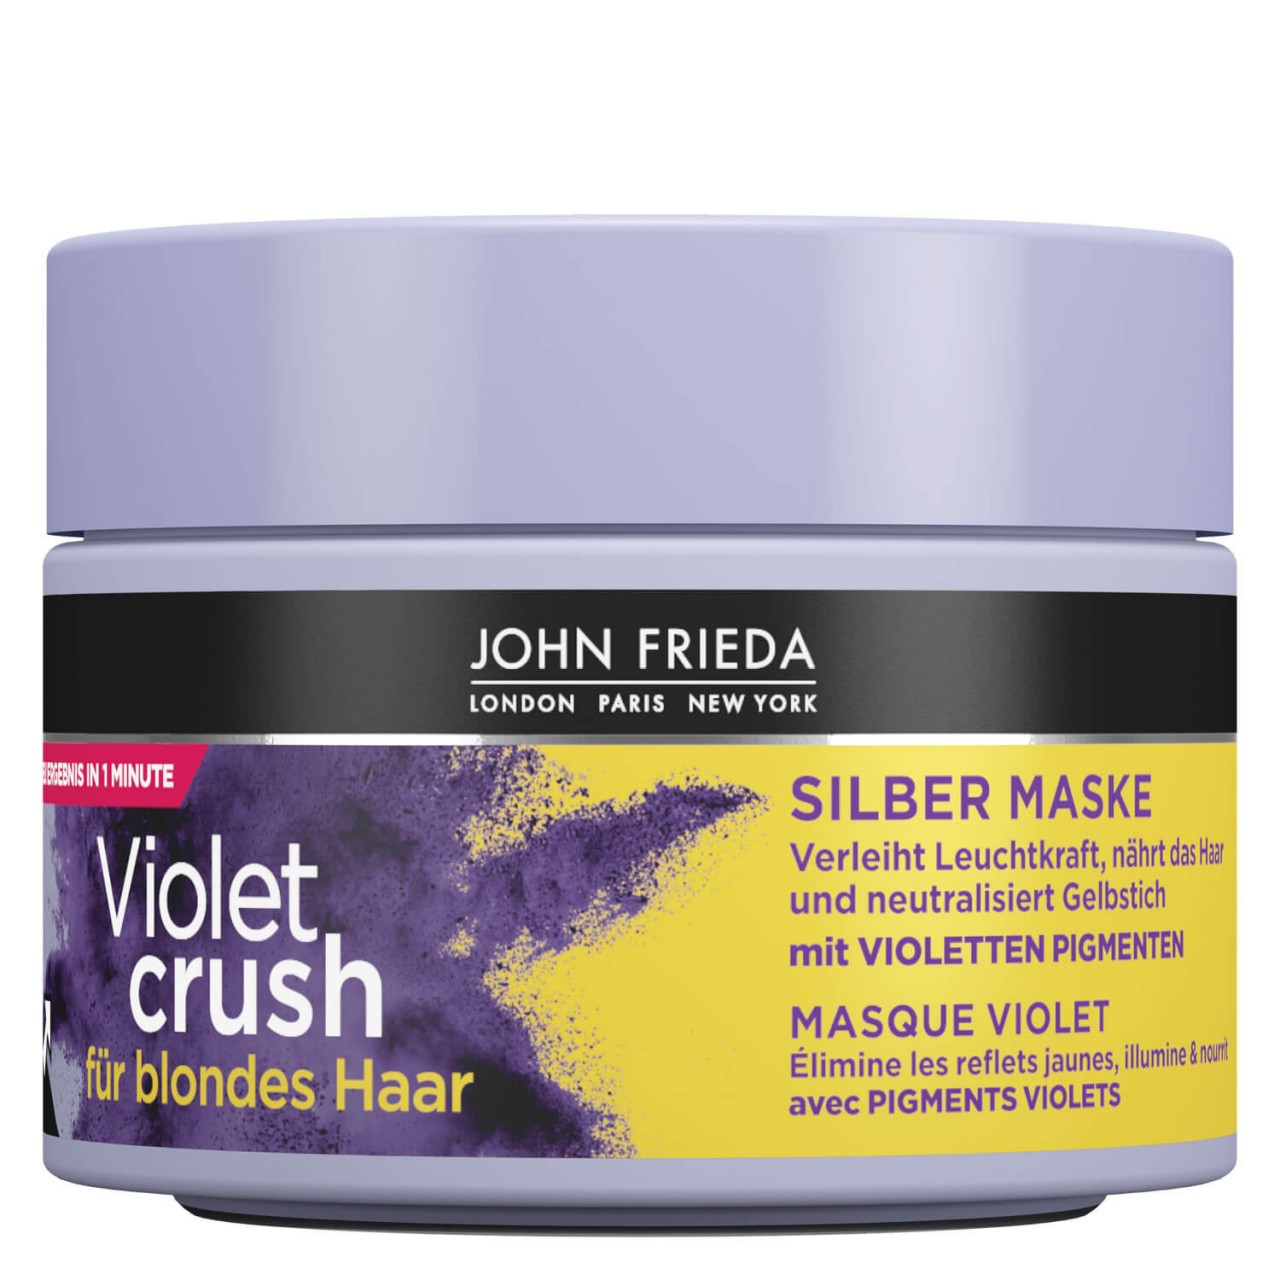 Sheer Blonde - Violet Crush Silber Maske von John Frieda